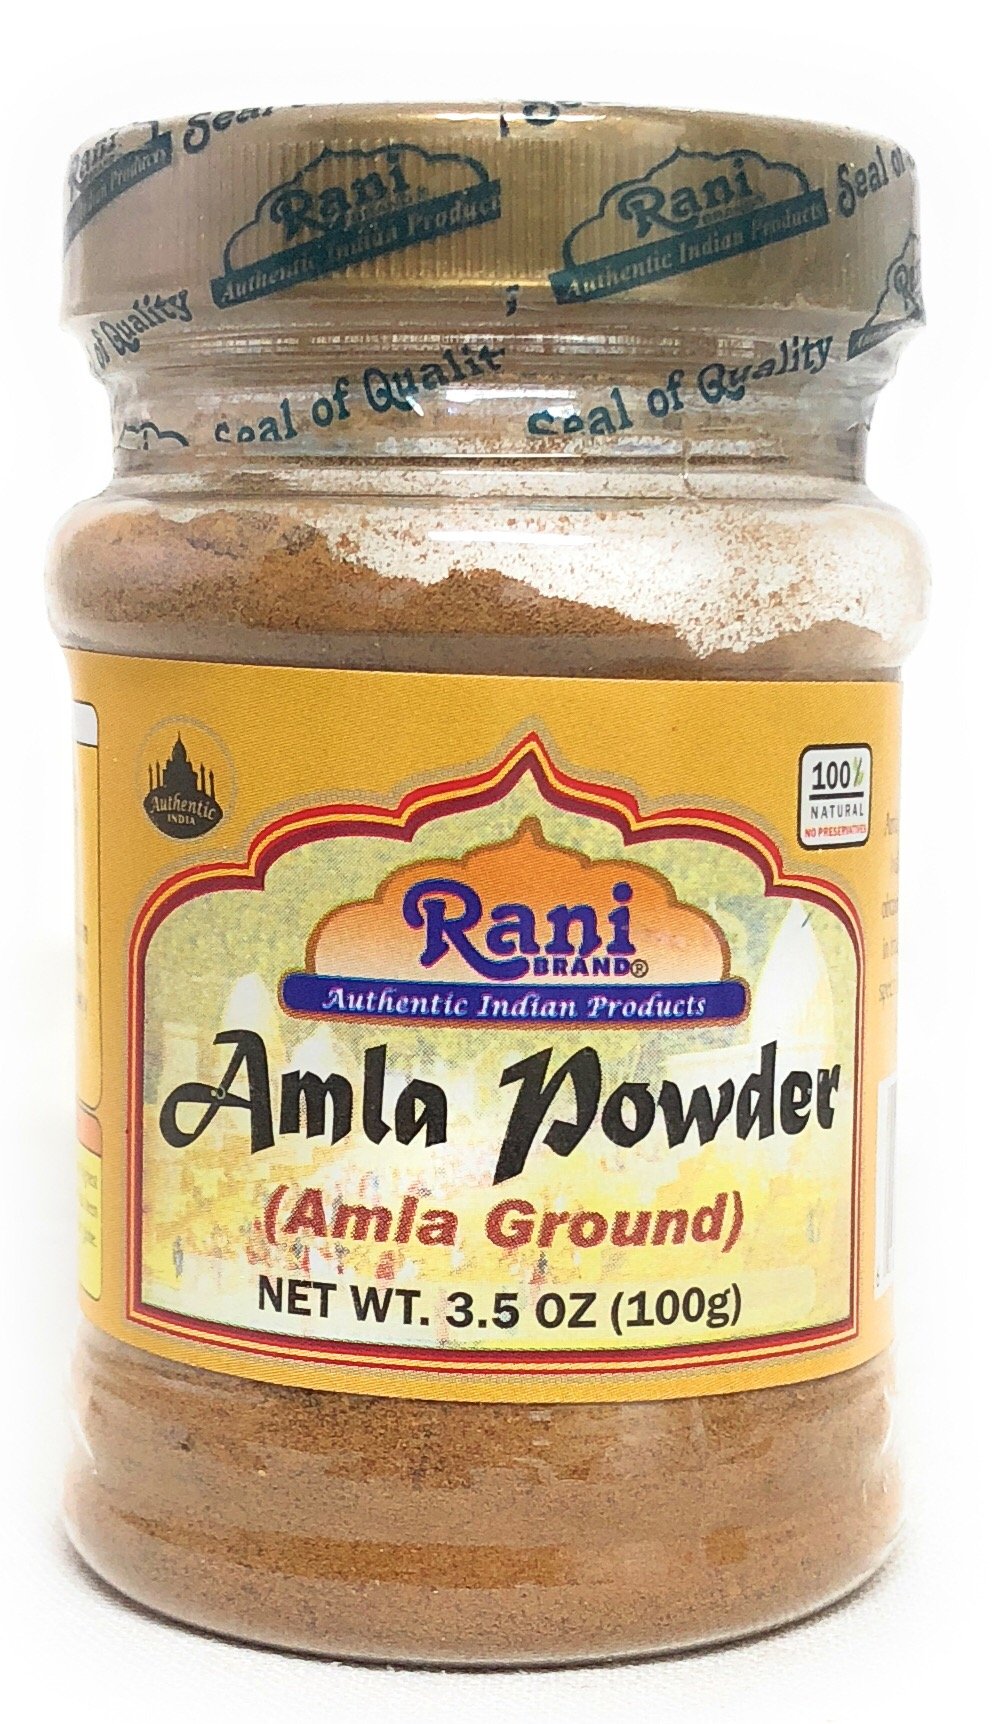 Rani Citric Acid Powder, Food Grade (Limbu Ka Ful) 5oz (141g) Pet Jar ~ used for Cooking, Bath Bombs, Cleaning | Gluten Friendly | Indian Origin